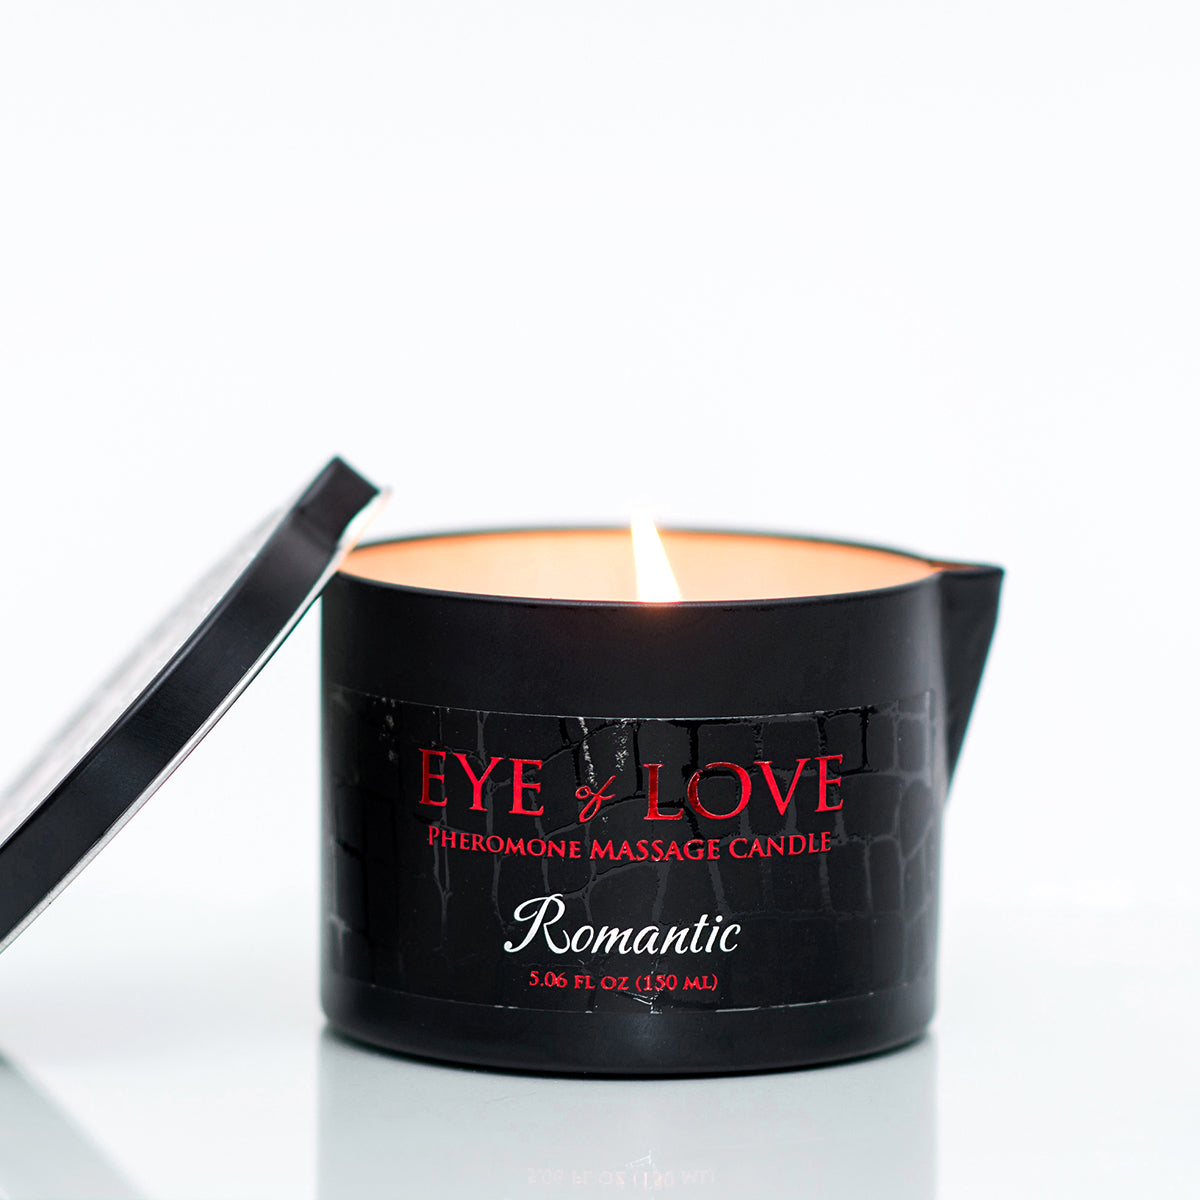 Eye of Love Pheromone Massage Candle 150ml Romantic (M to F)